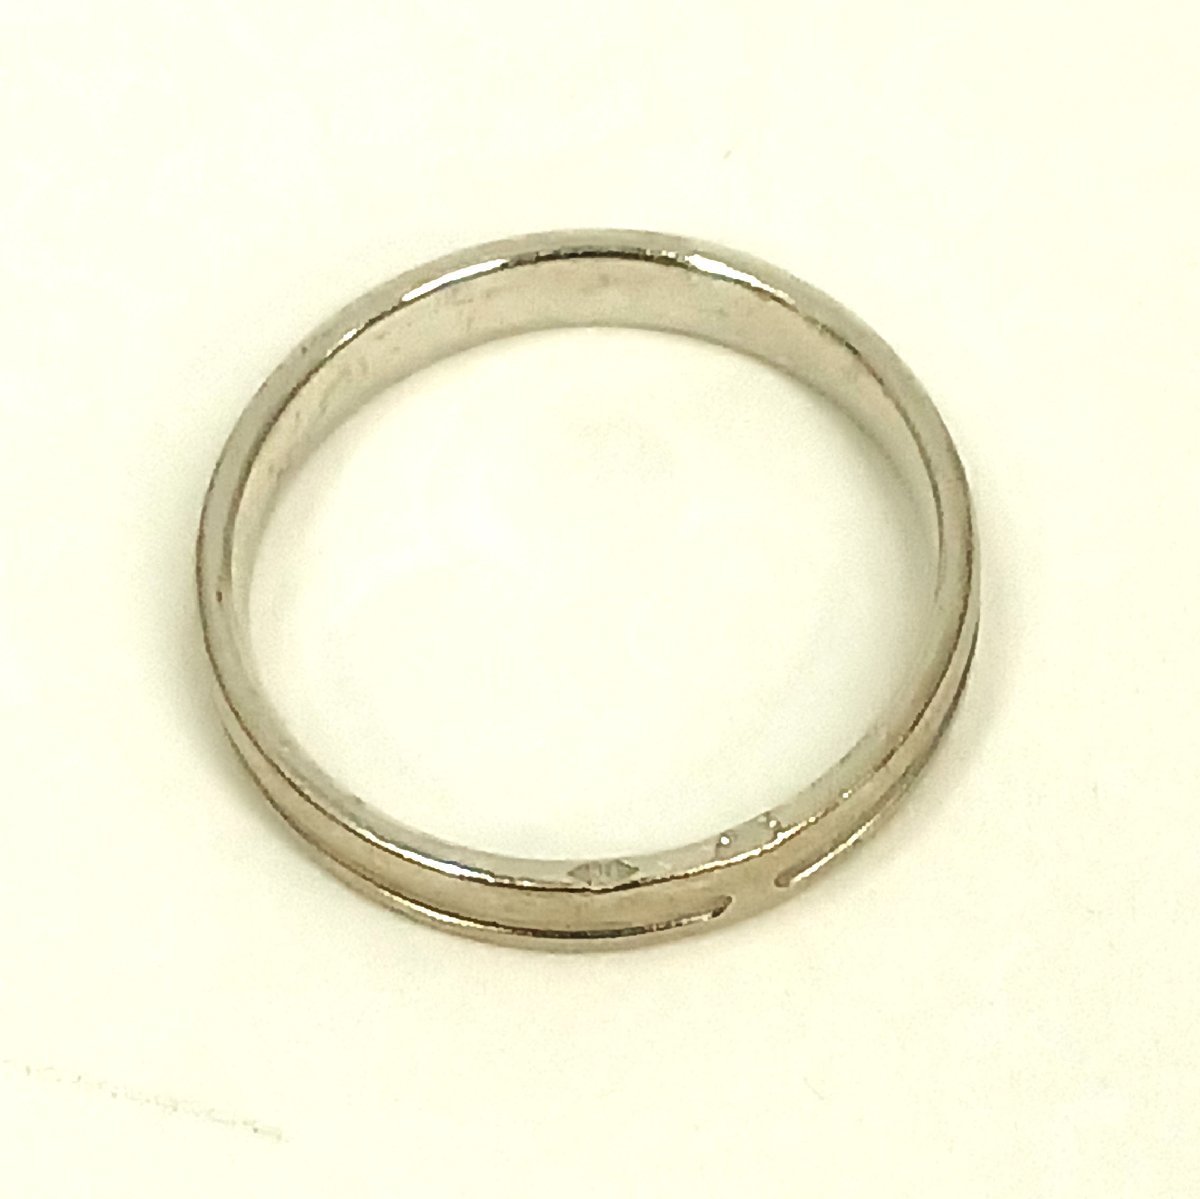  Hermes Anne план to кольцо кольцо 750 белое золото WG примерно 2.4g #48 примерно 8 номер женский аксессуары б/у товар HERMES *